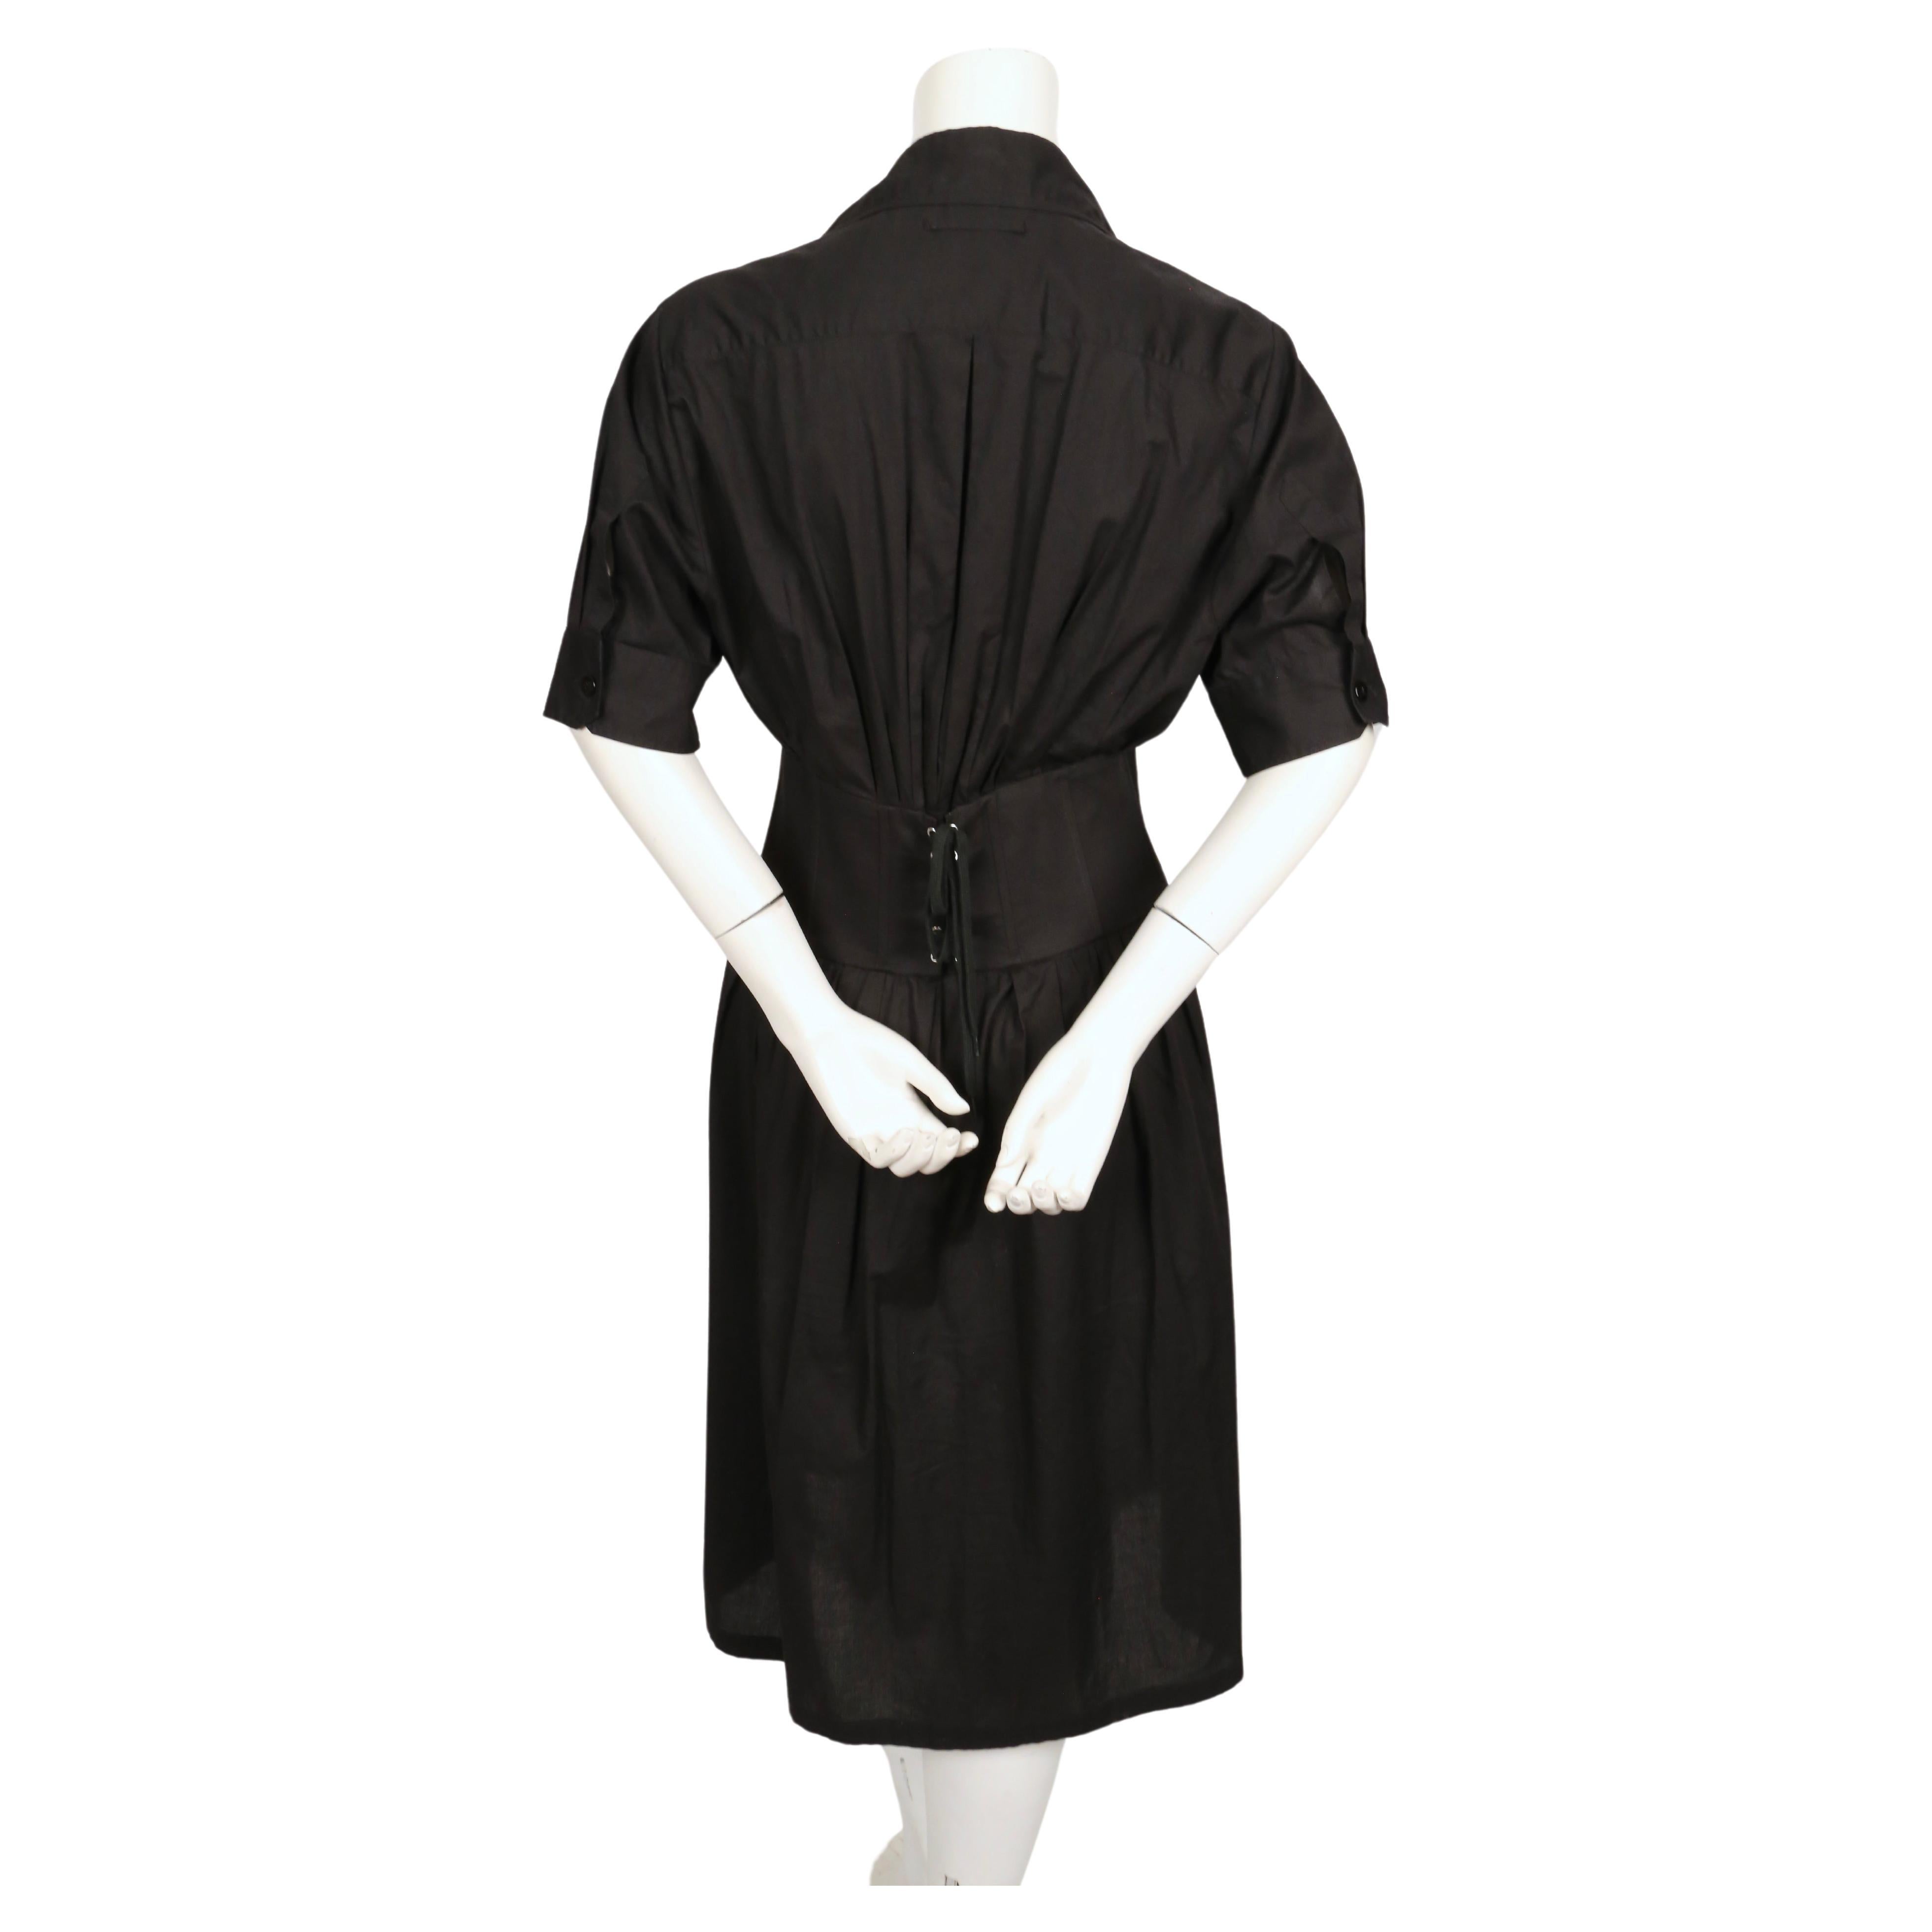 1990's JEAN PAUL GAULTIER black dress with corset waist For Sale 2